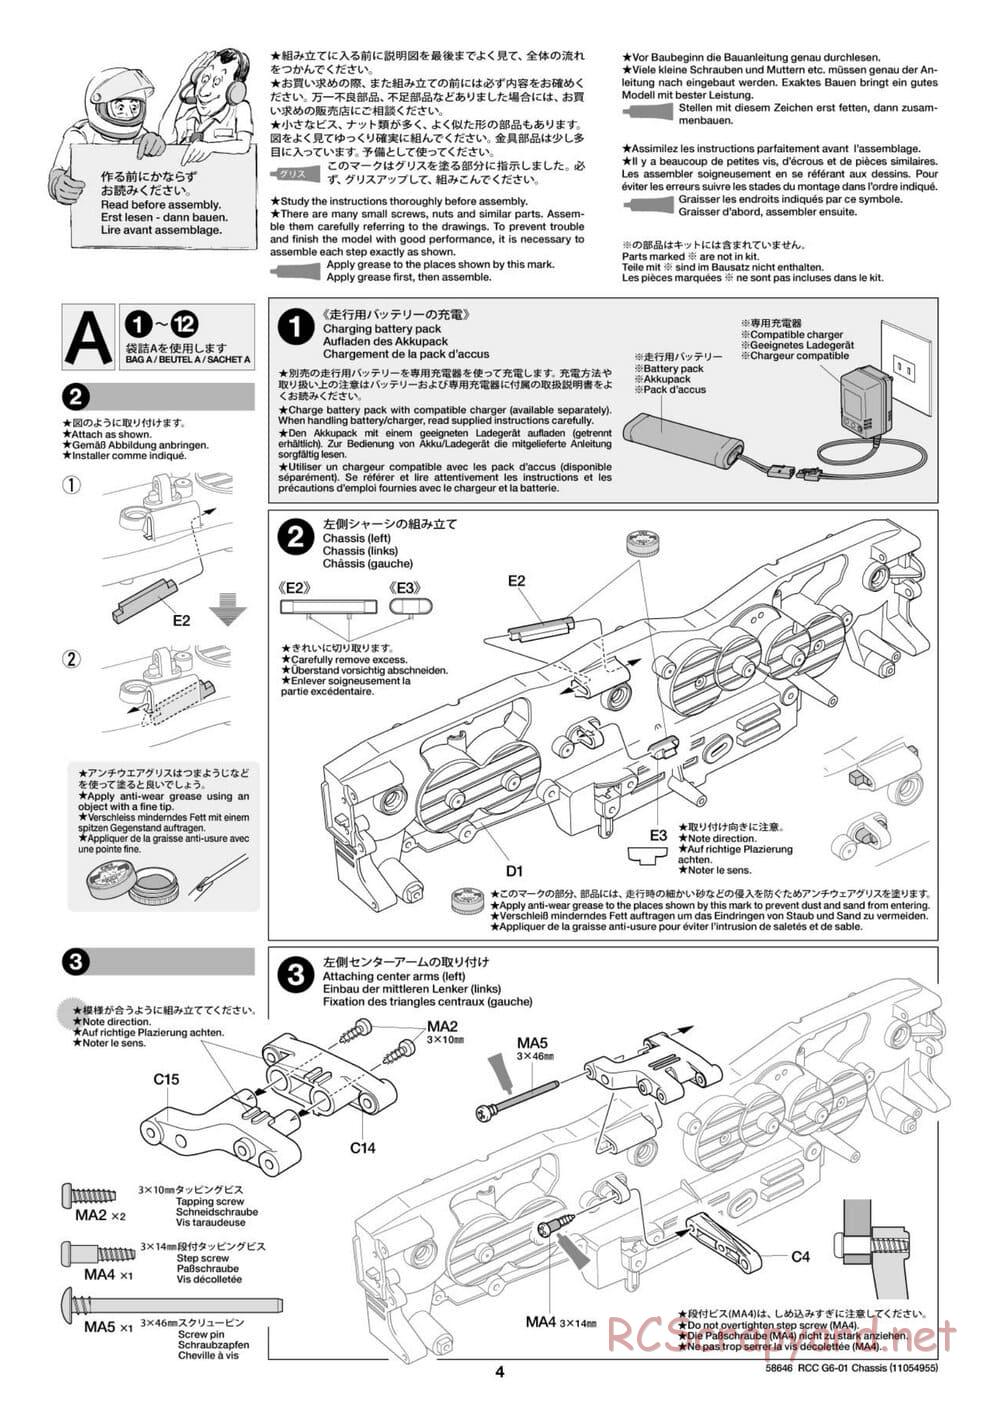 Tamiya - Konghead 6x6 - G6-01 Chassis - Manual - Page 4